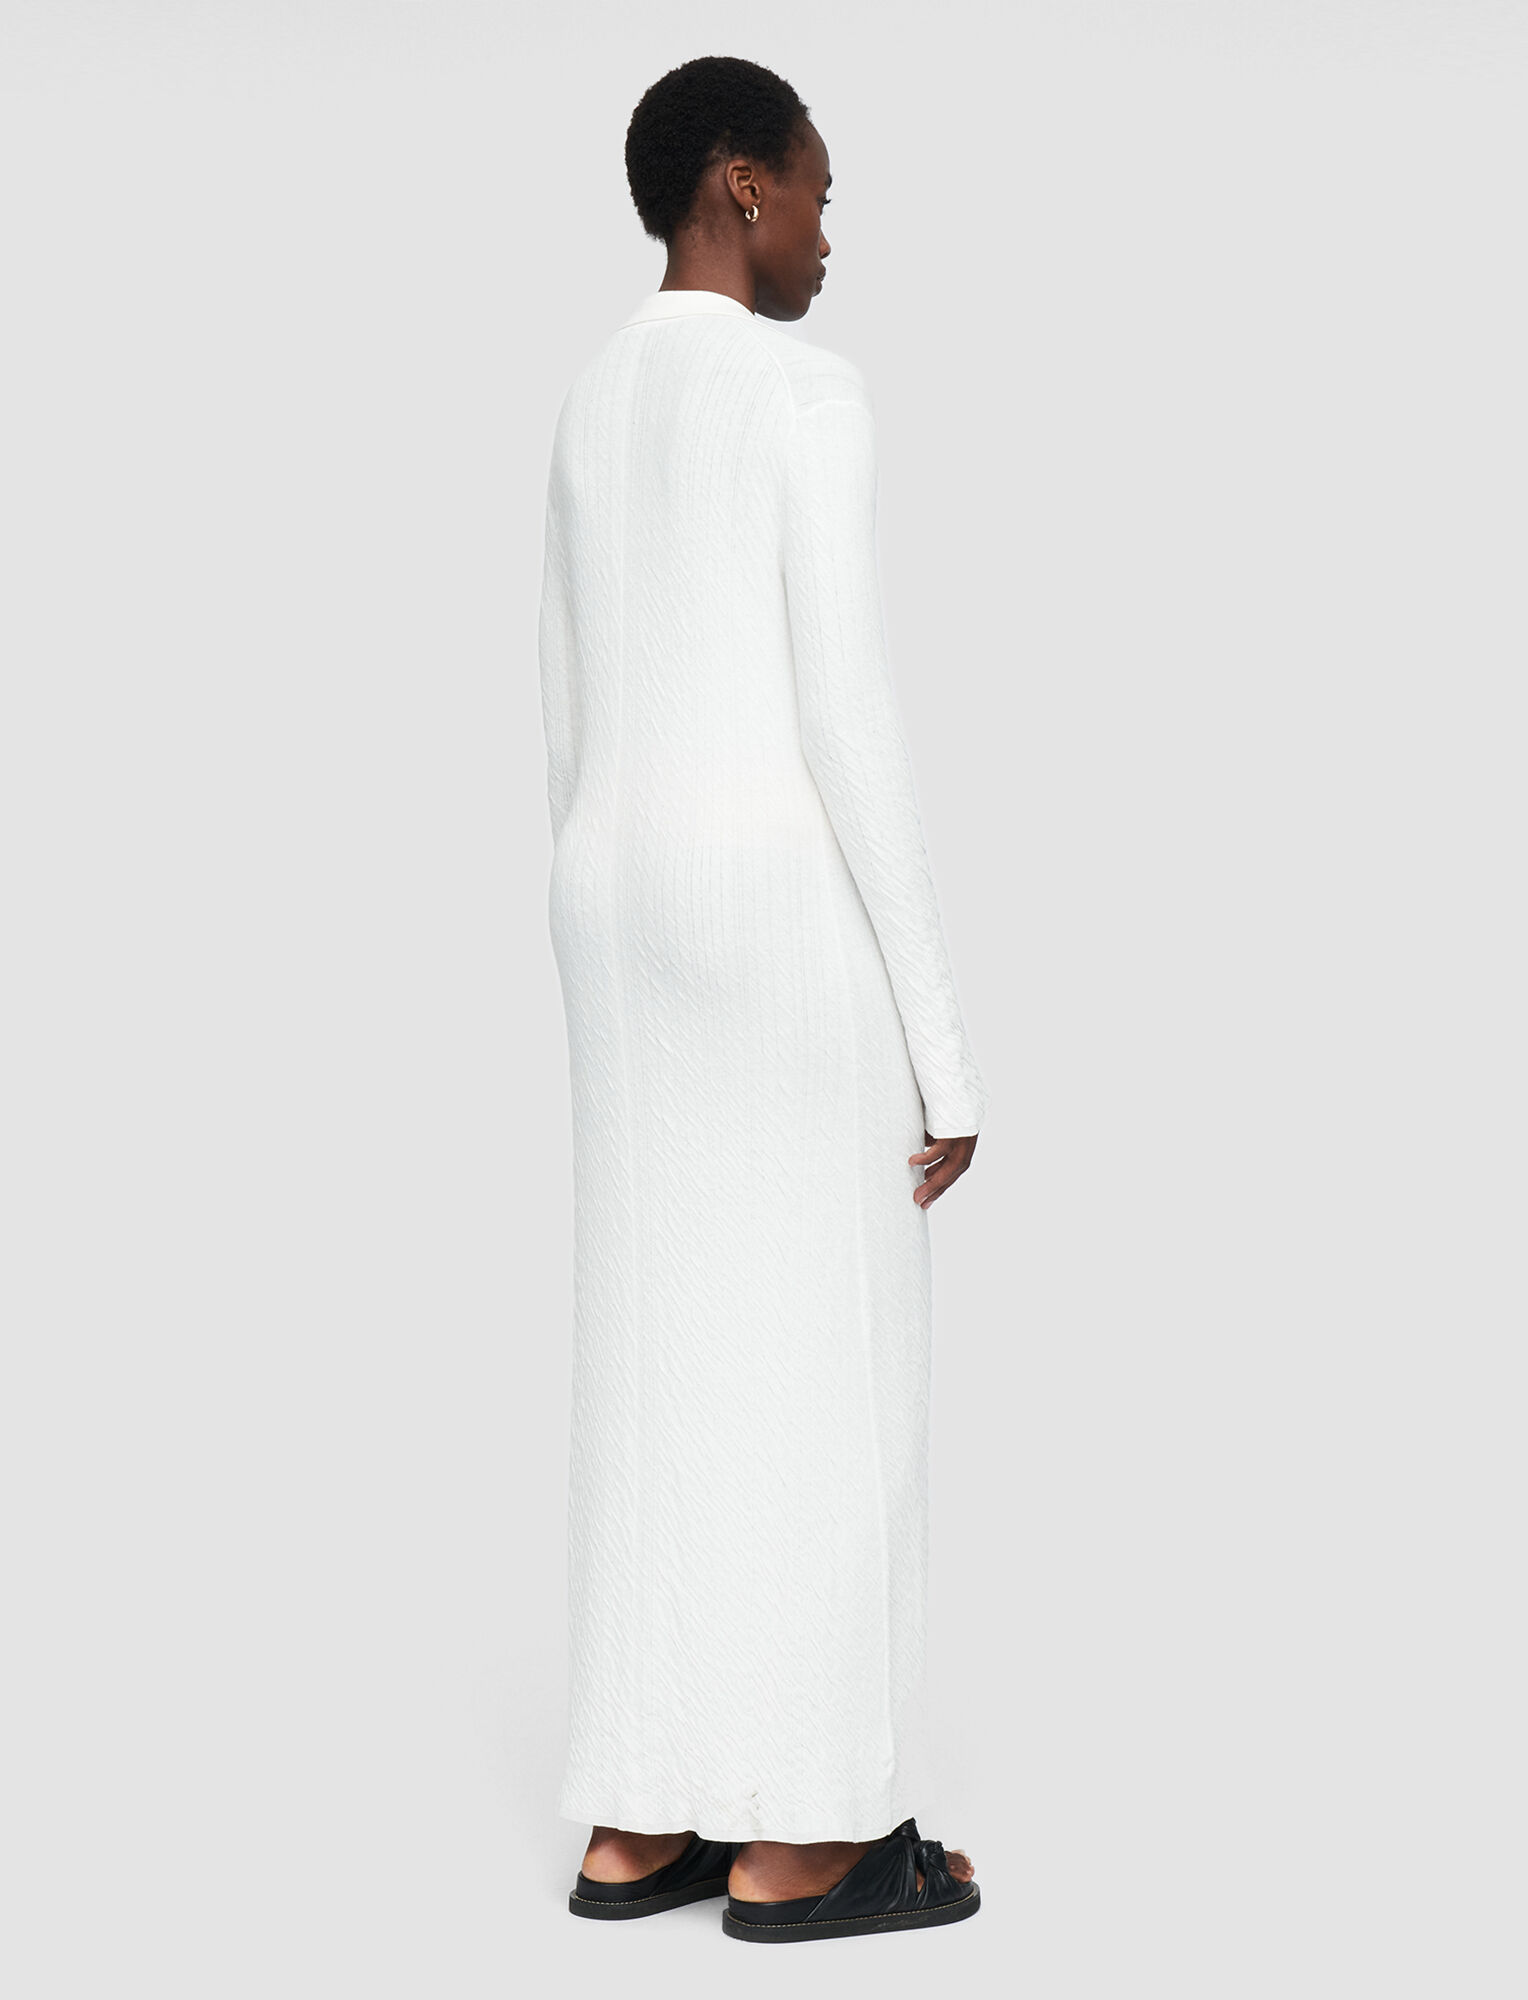 Joseph, Crinkled Cotton Cardigan Dress, in Ivory